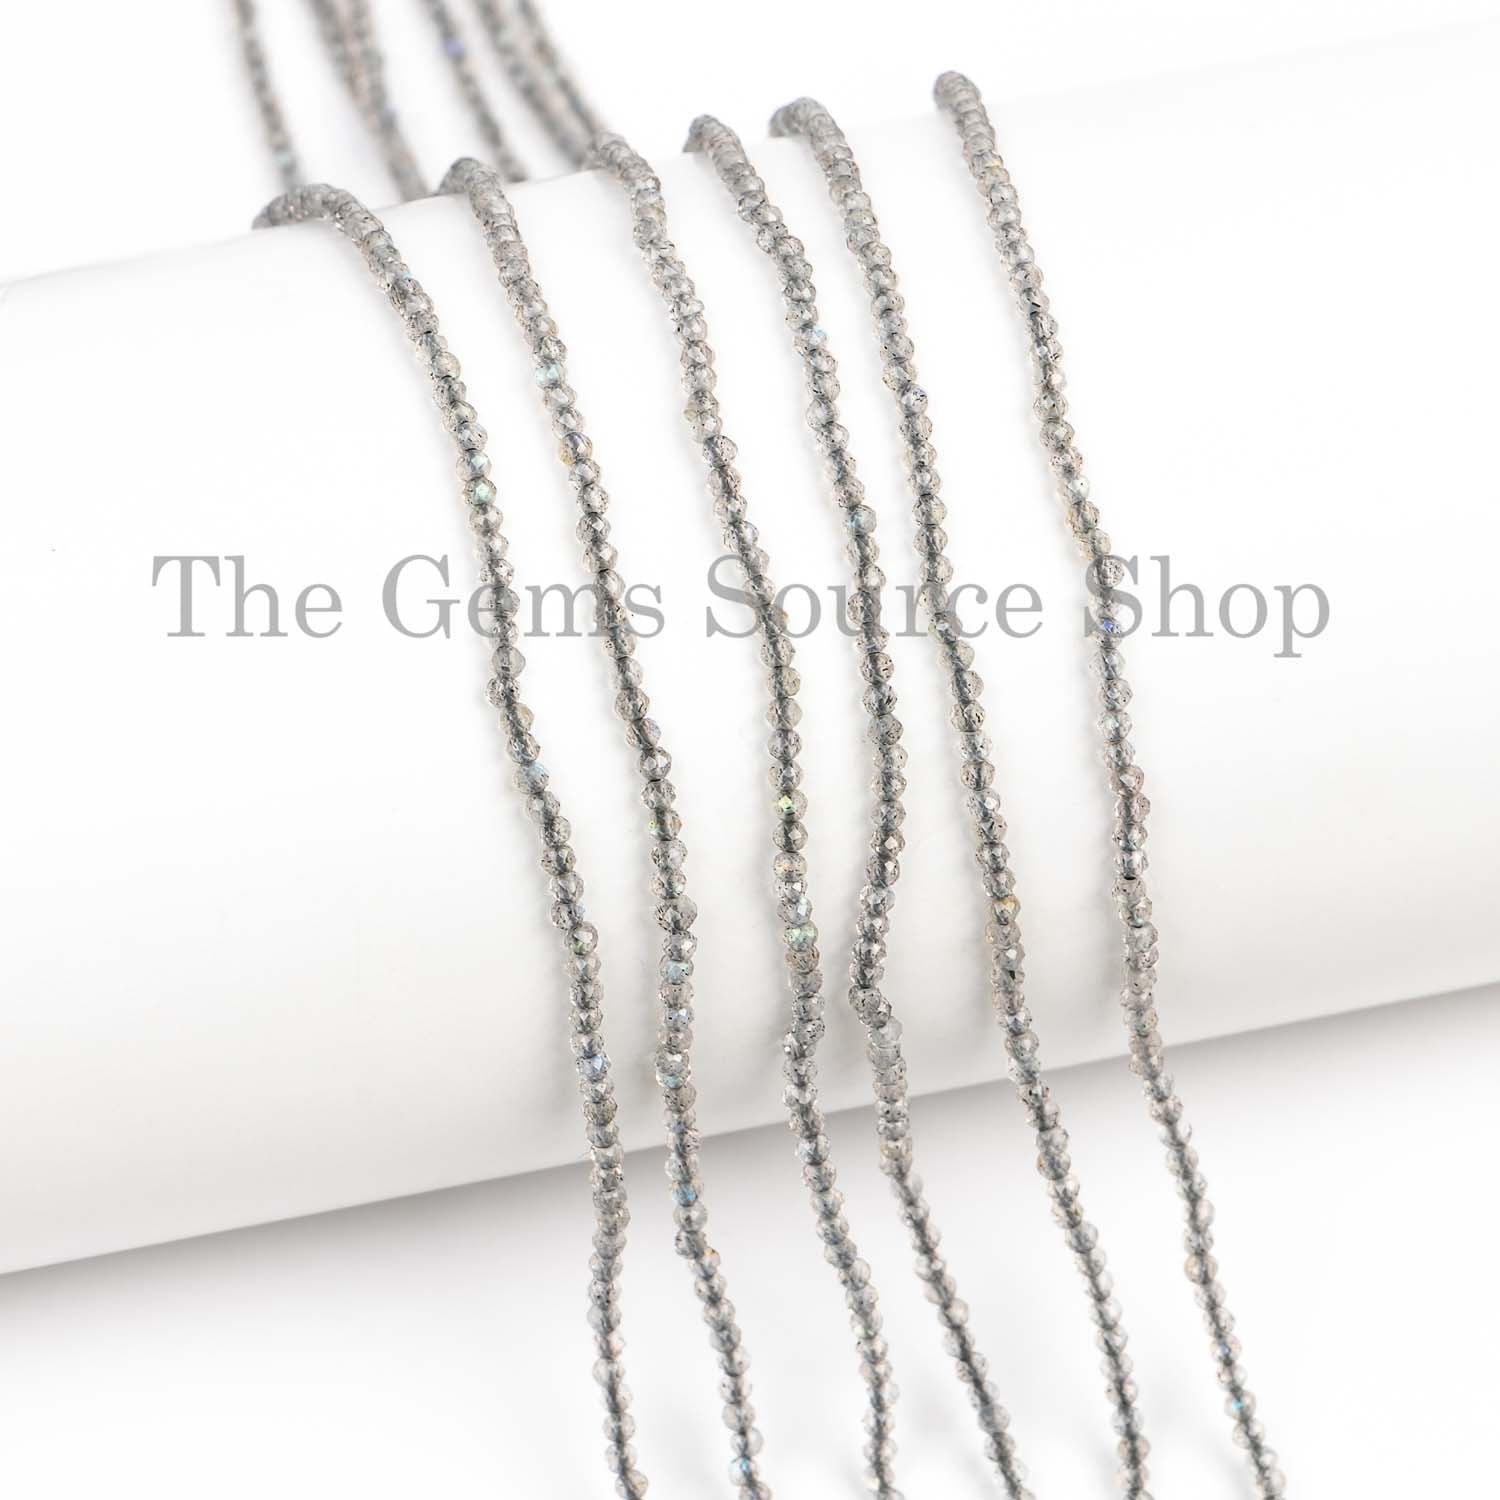 Labradorite Beads, Faceted Rondelle Beads, Labradorite Machine Cut Beads, Wholesale Gemstone Beads